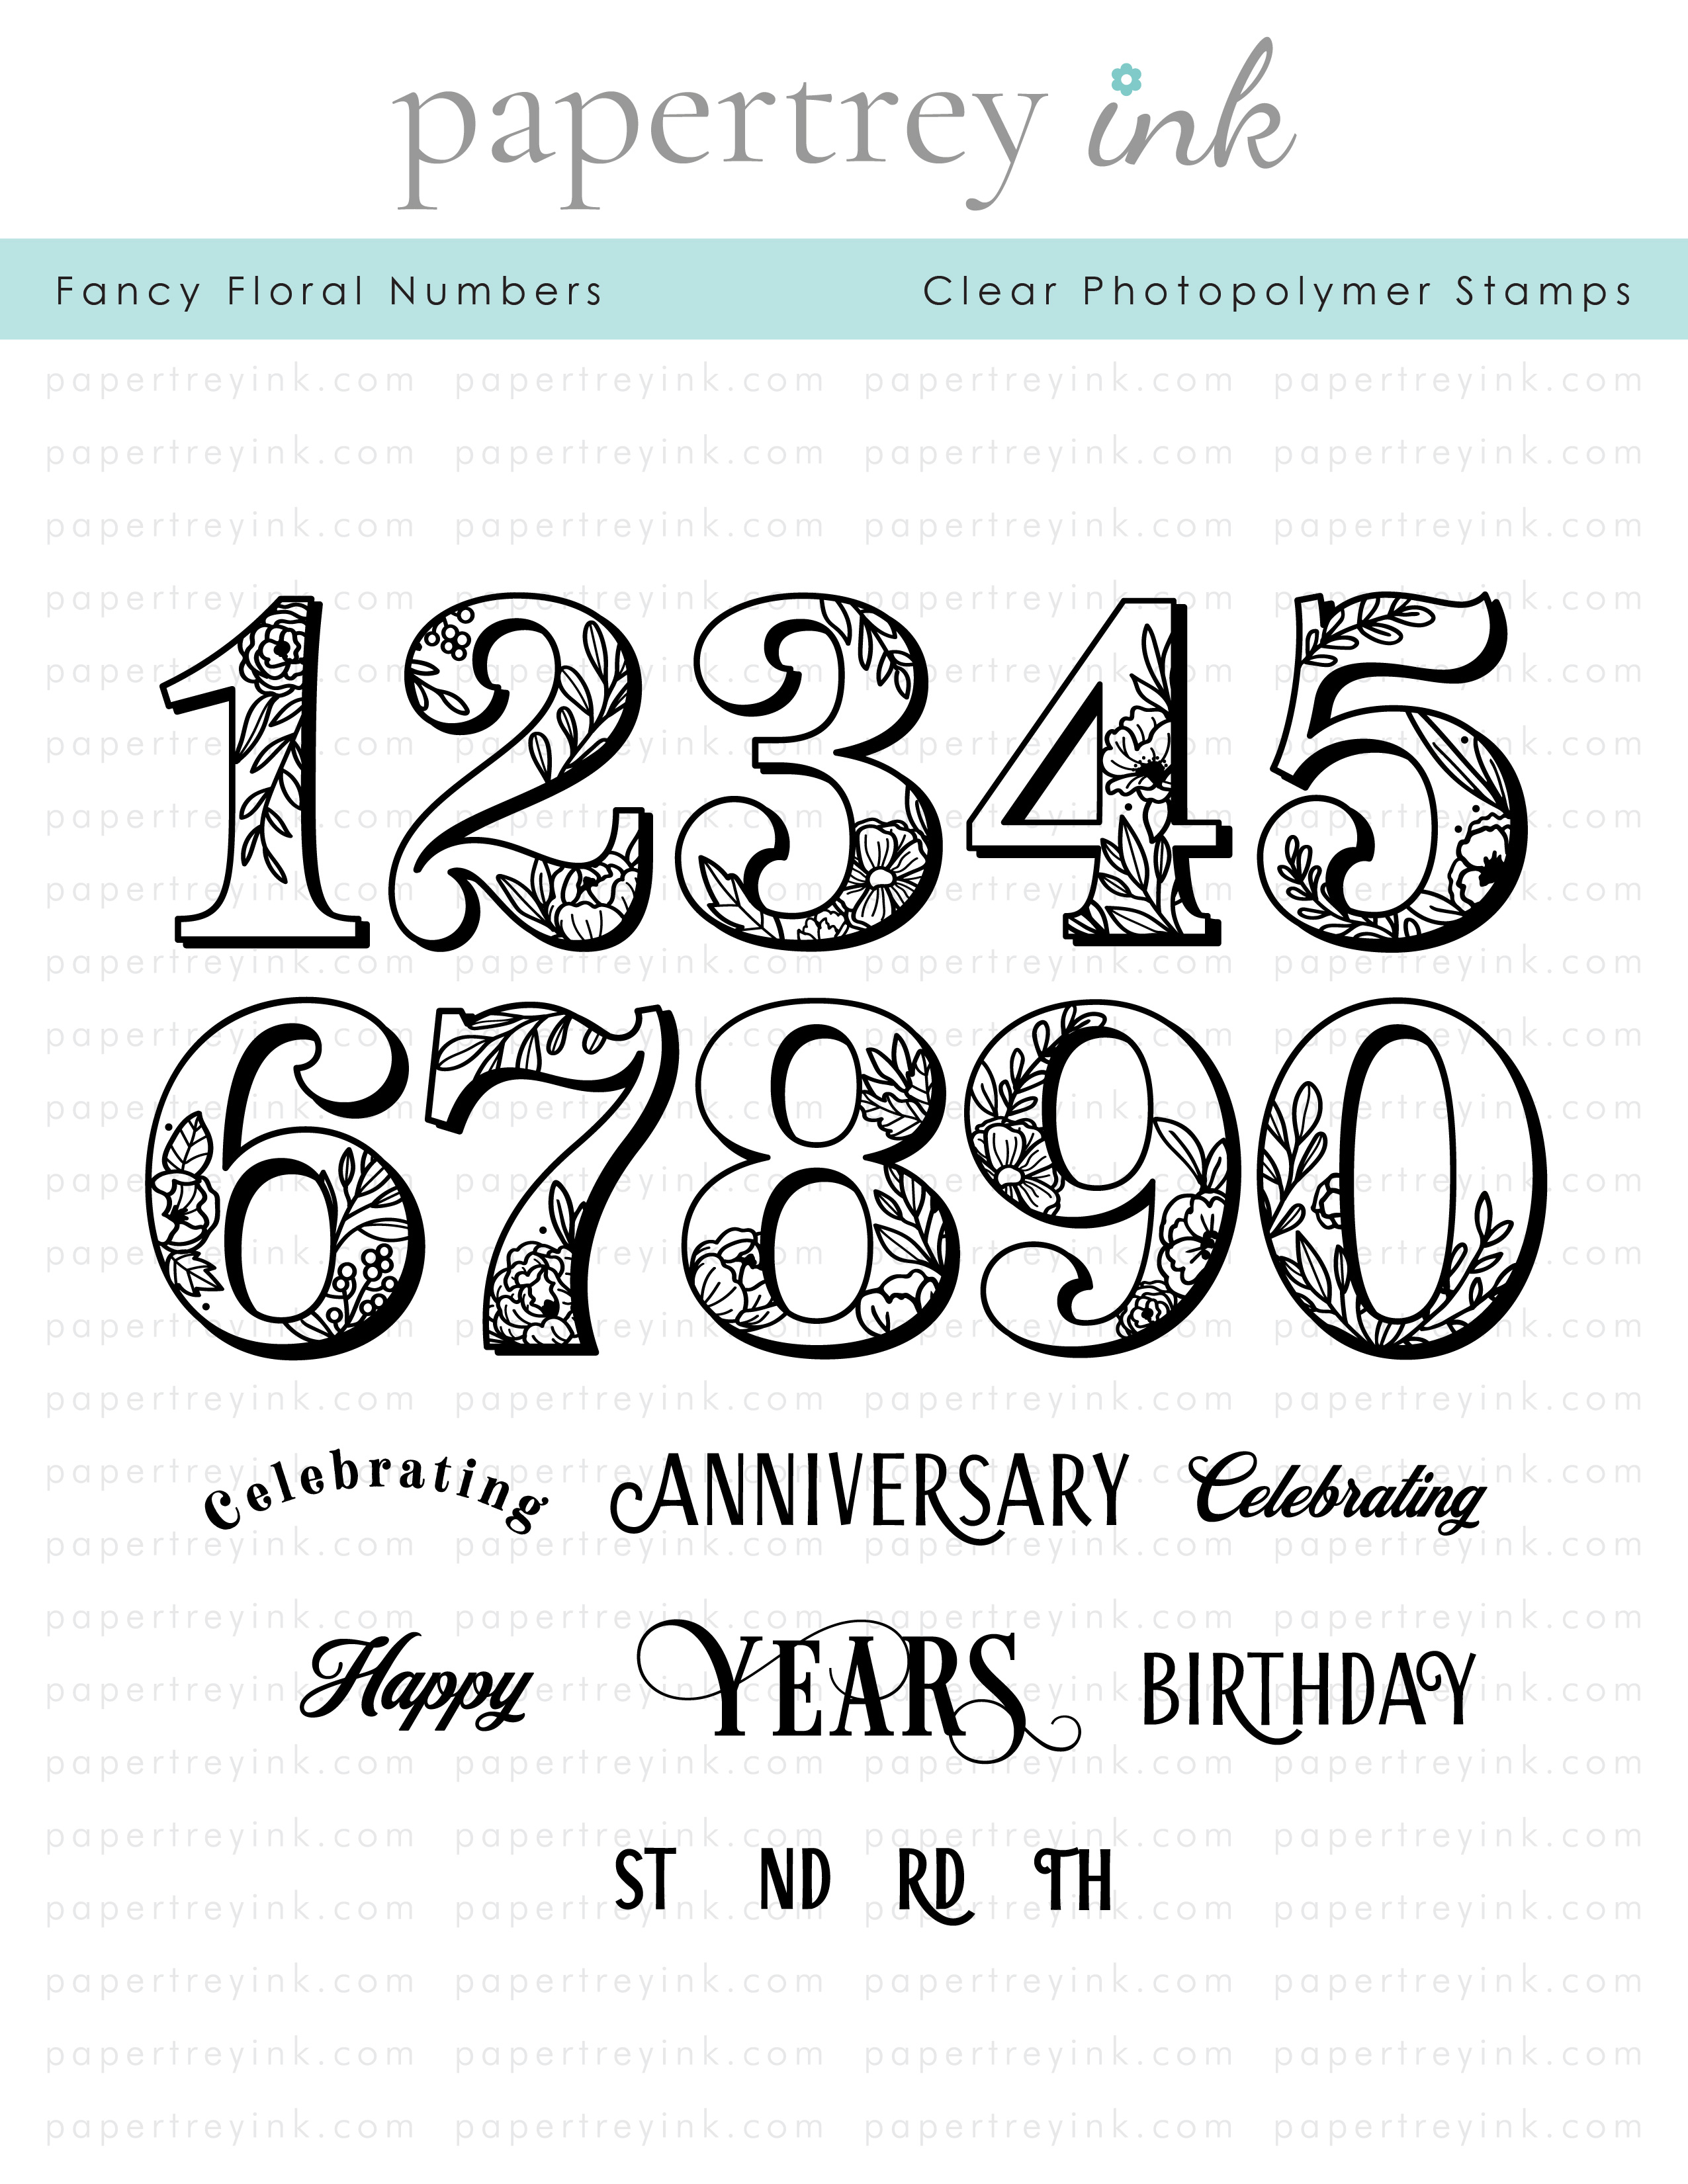 Papertrey Ink - Fancy Floral Numbers Stamp Set